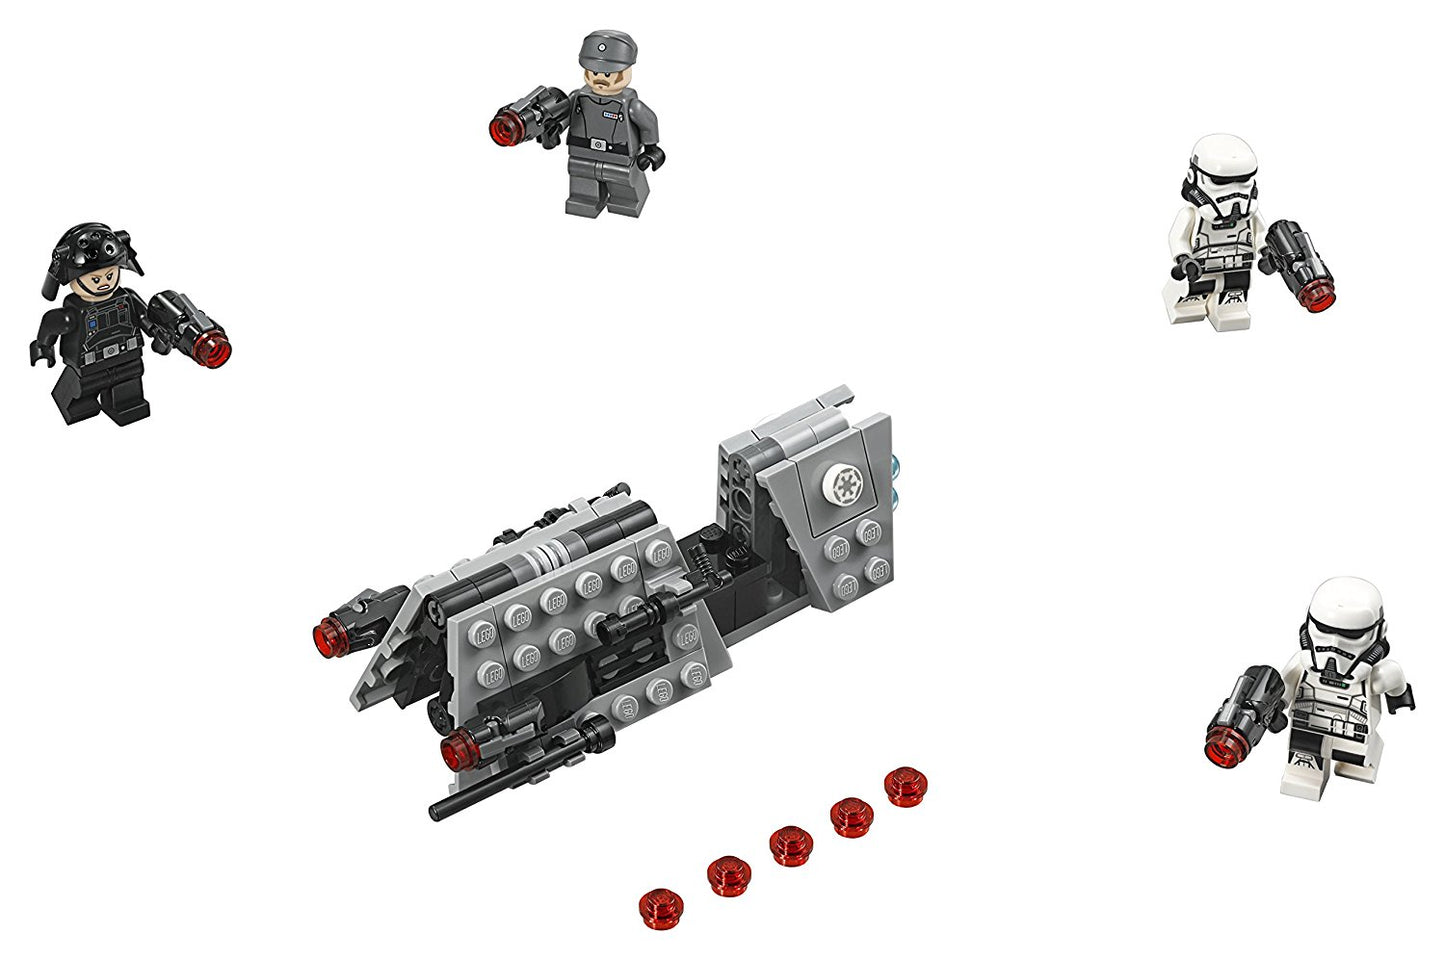 Lego Star Wars Imperial Patrol Battle Pack 75207